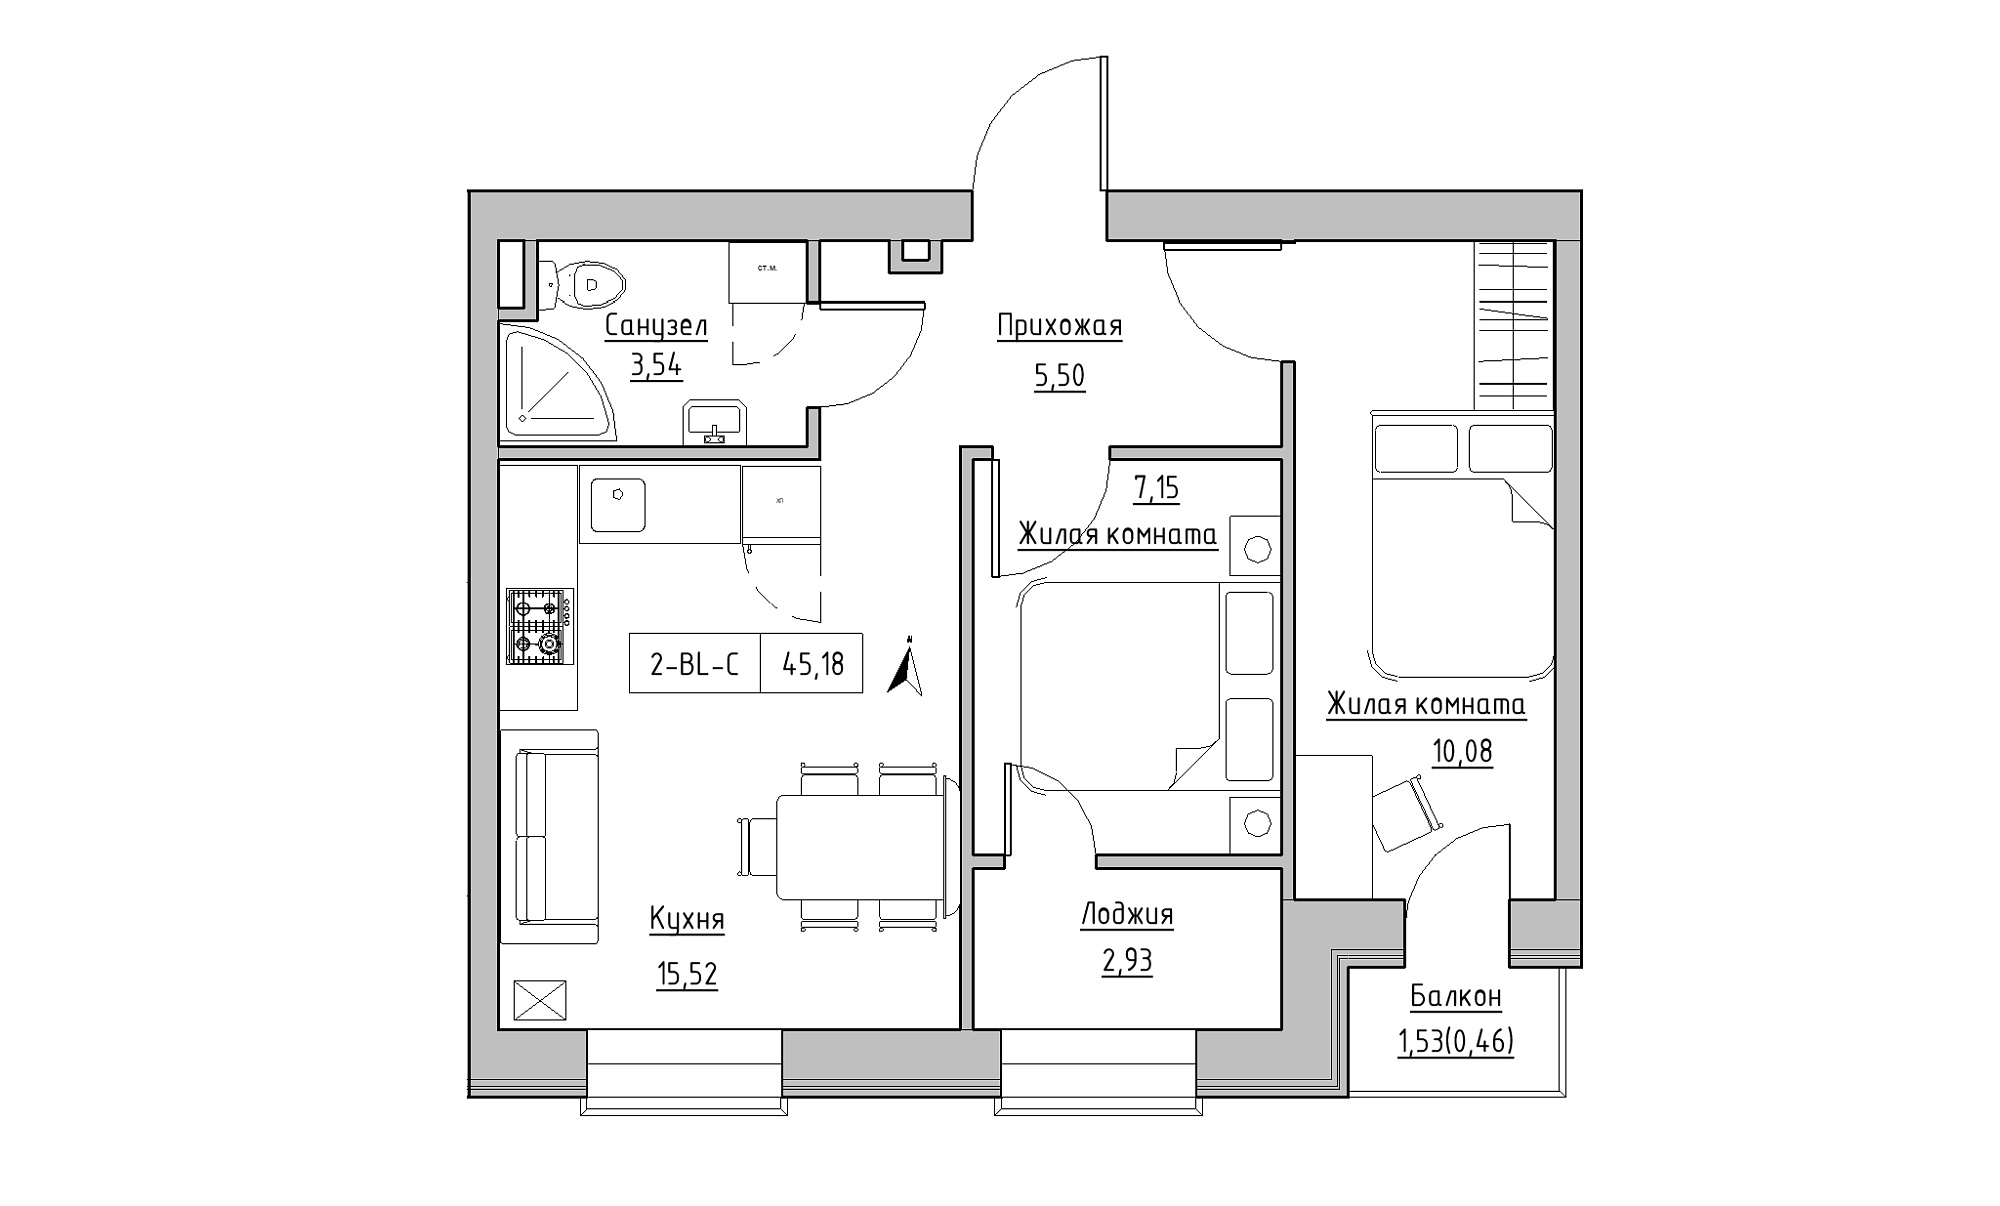 Planning 2-rm flats area 45.18m2, KS-023-03/0009.